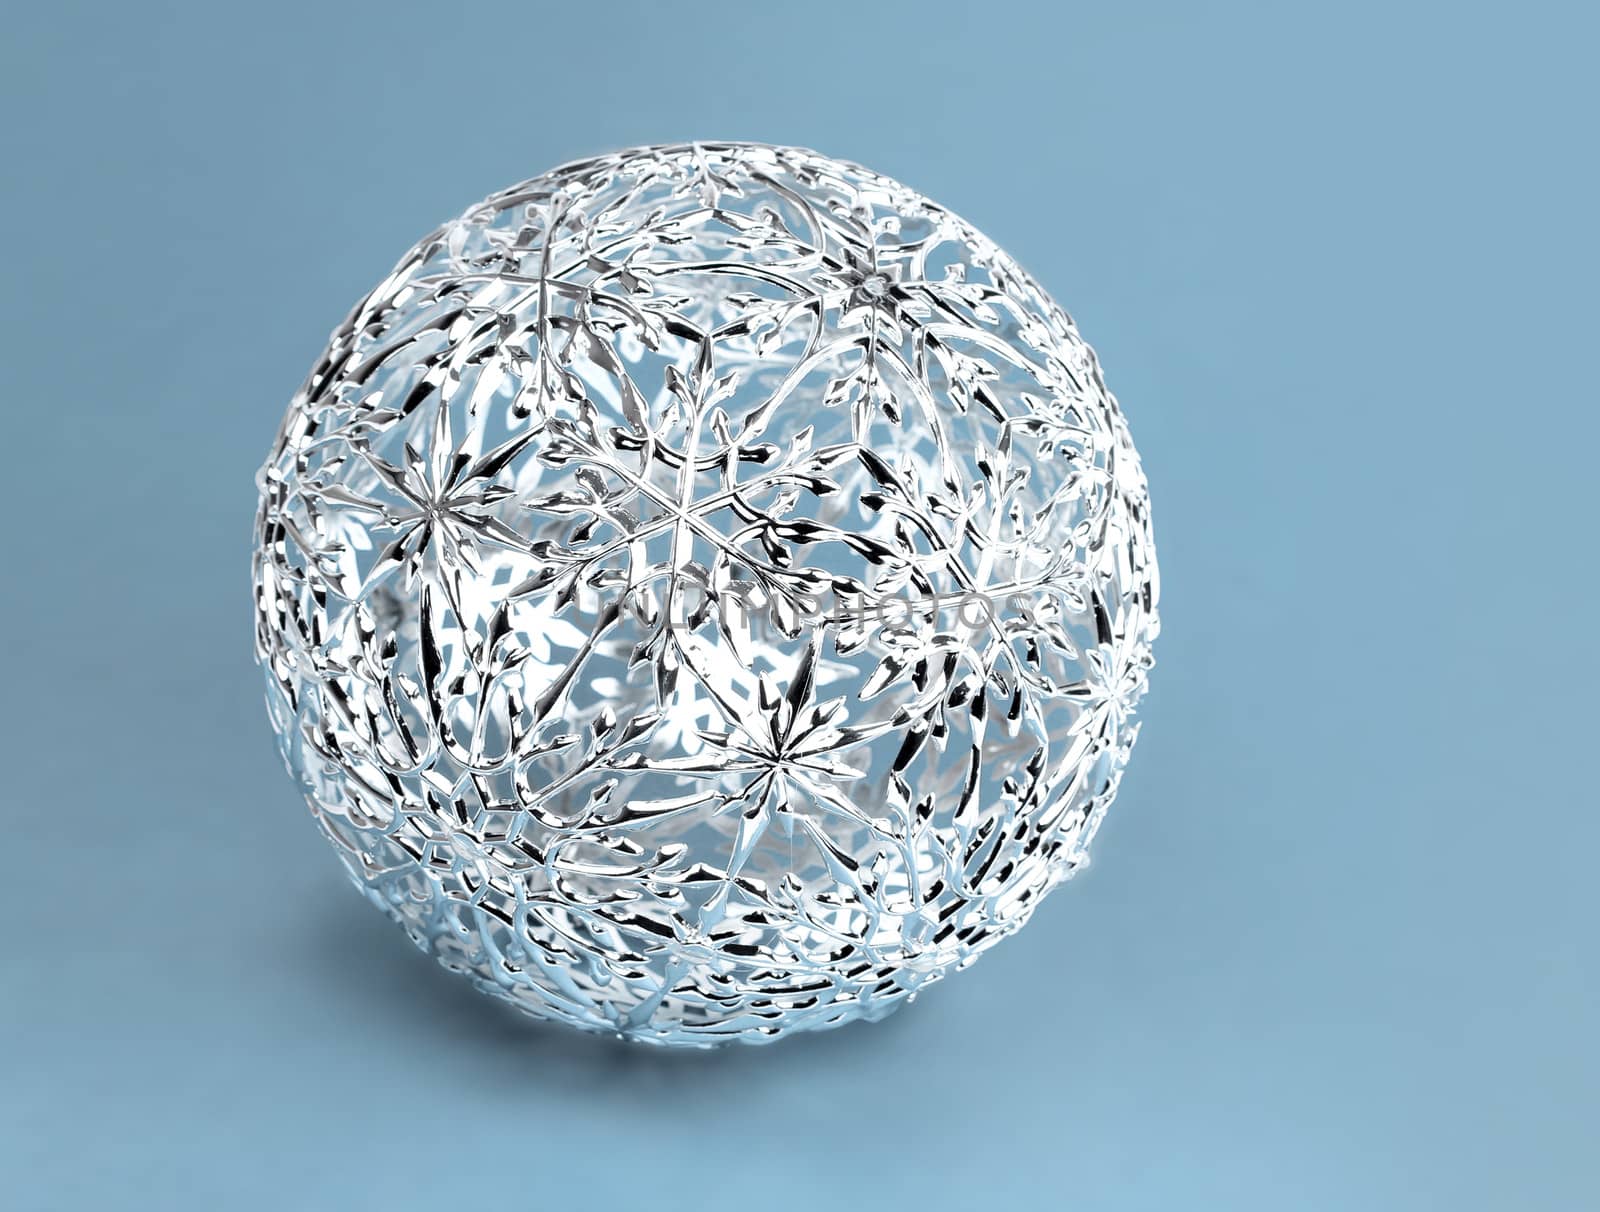 Silver Christmas filigrane decoration ball by anterovium